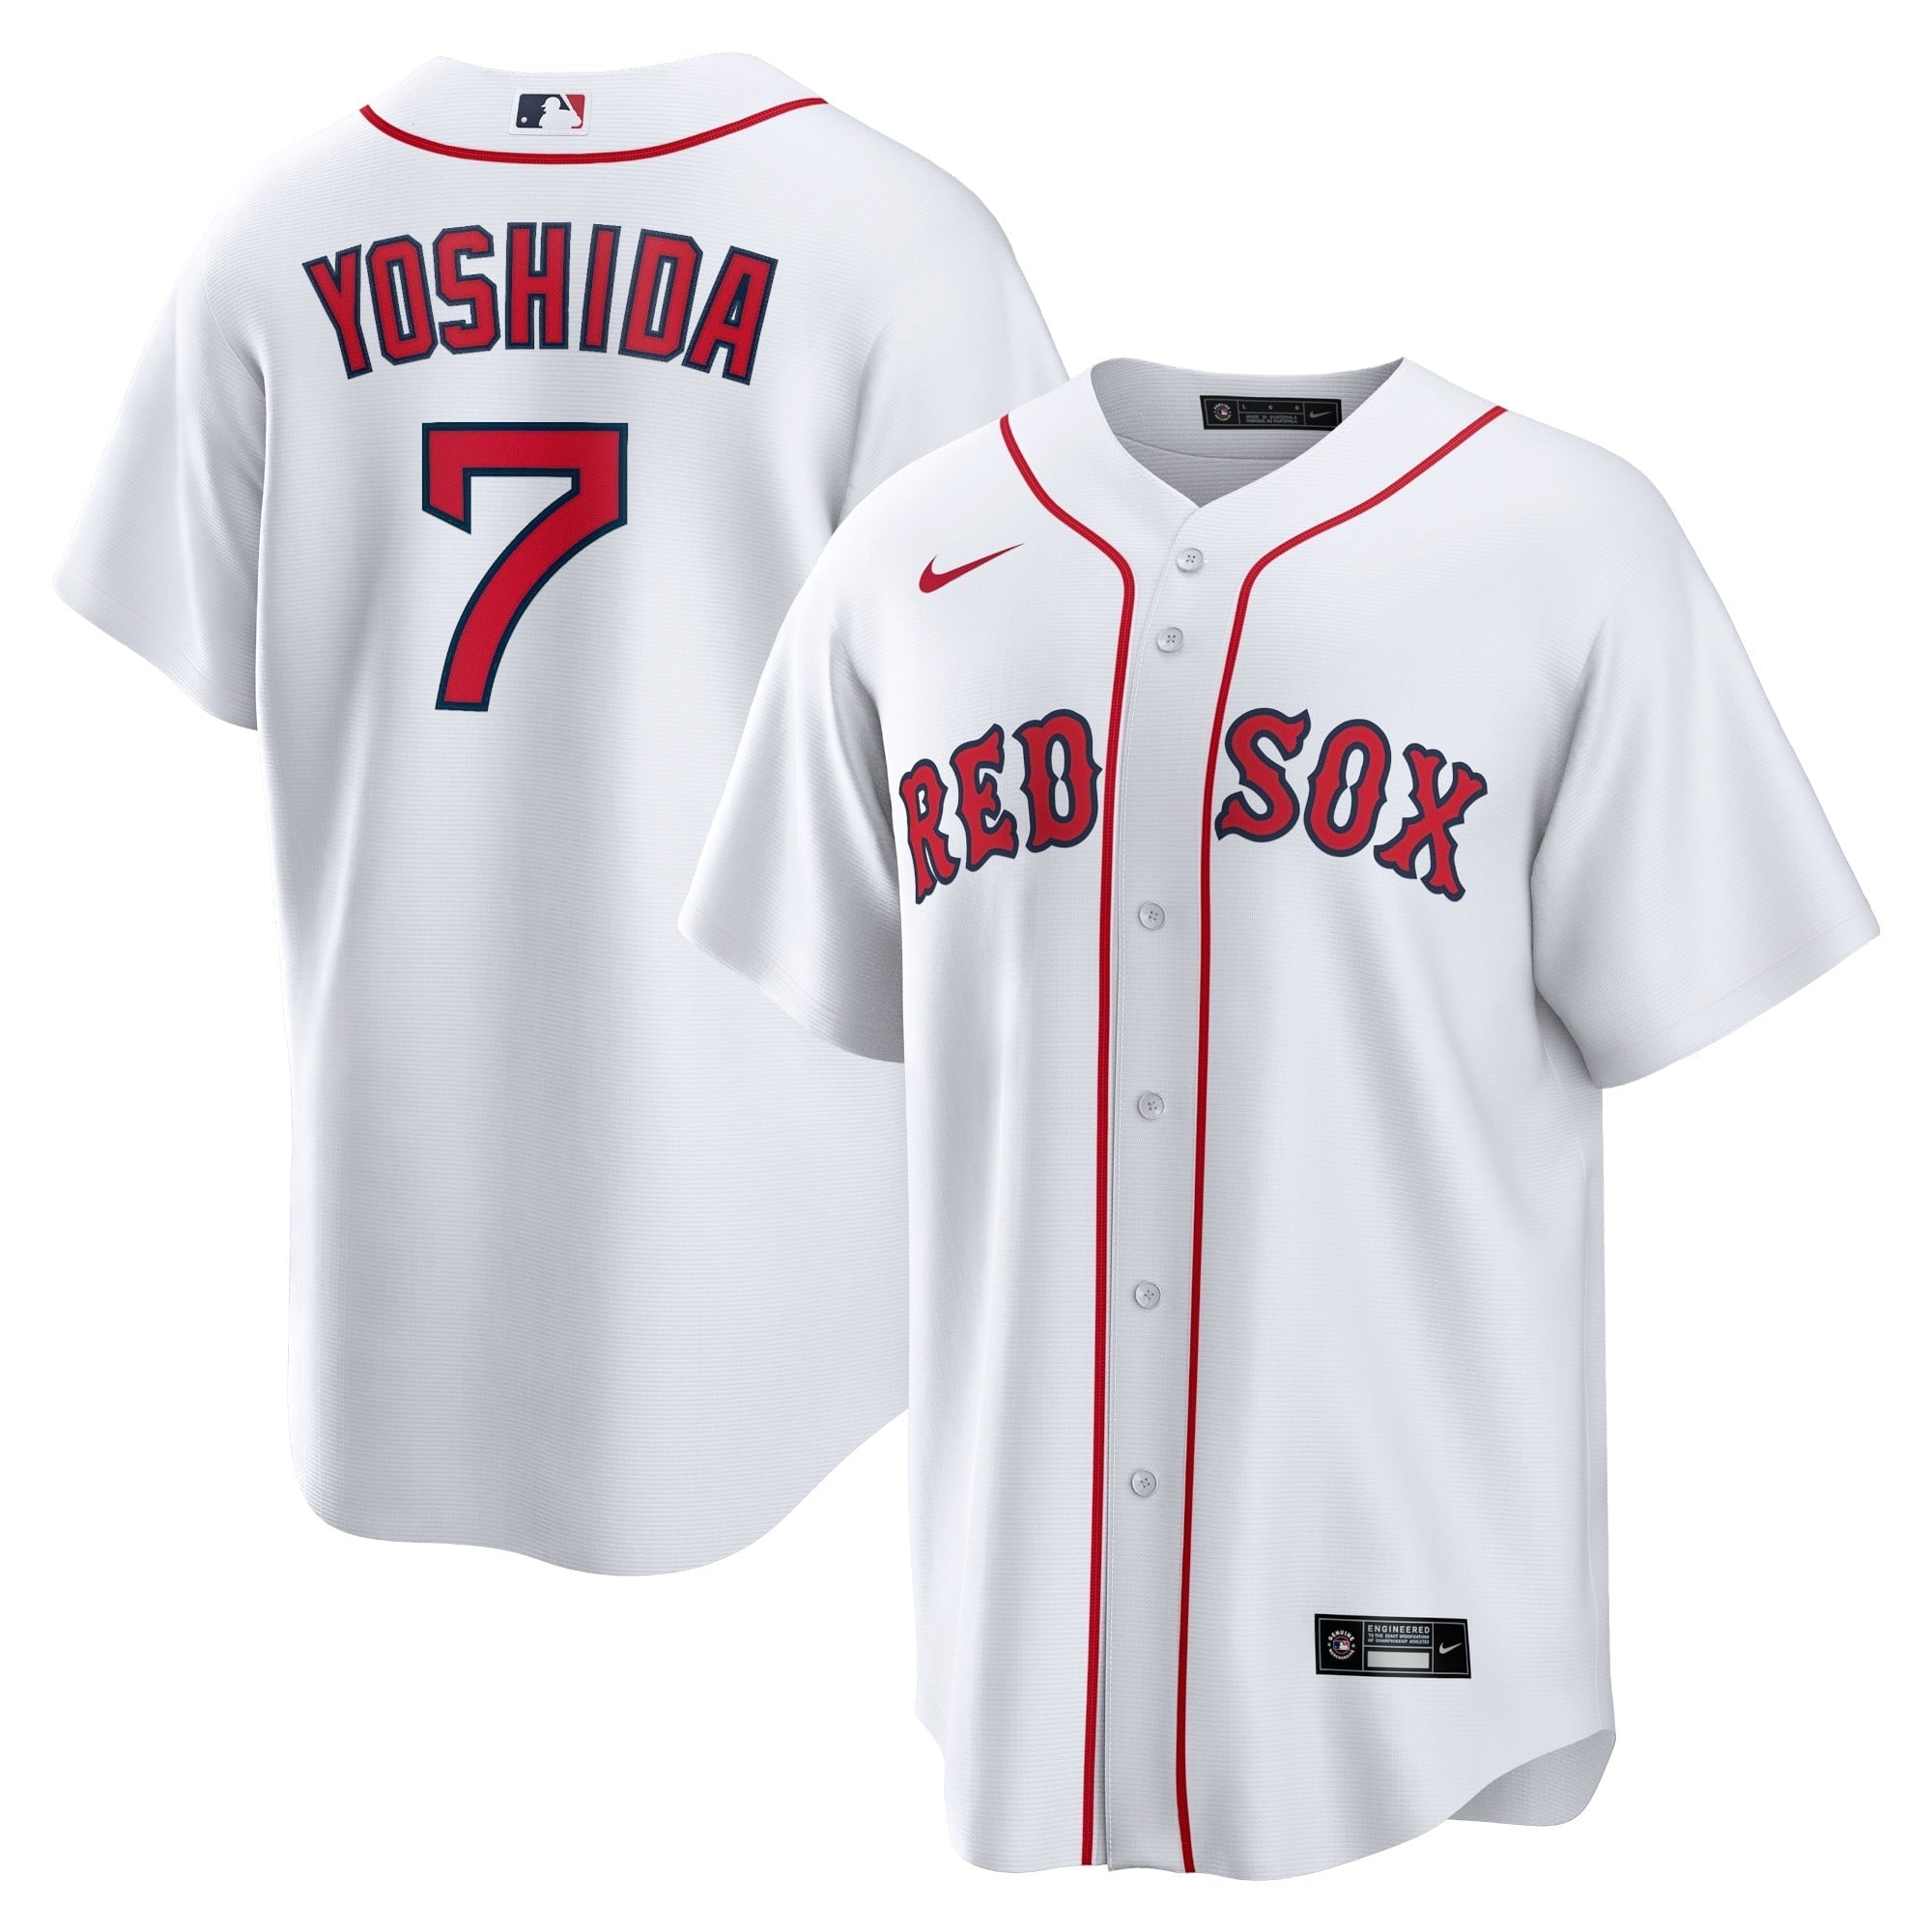 Welcome Masataka Yoshida to the Boston Red Sox 